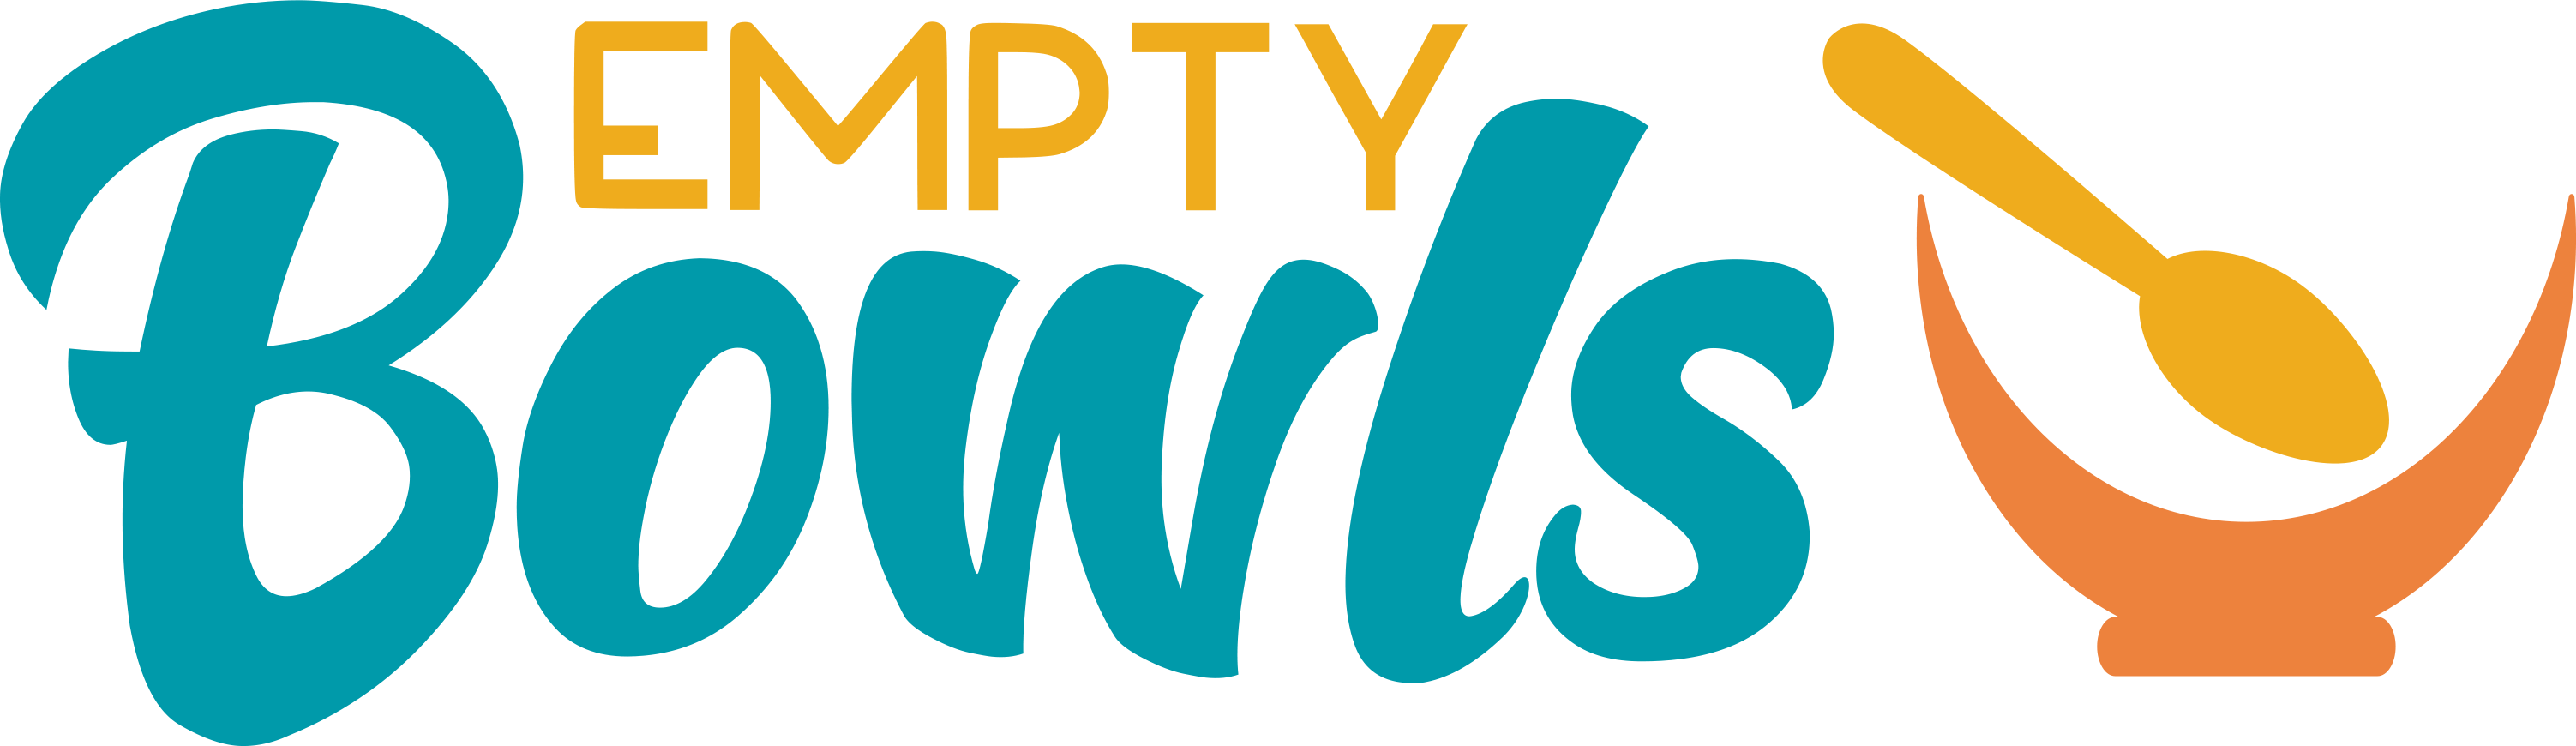 emptybowls-logo-1-png